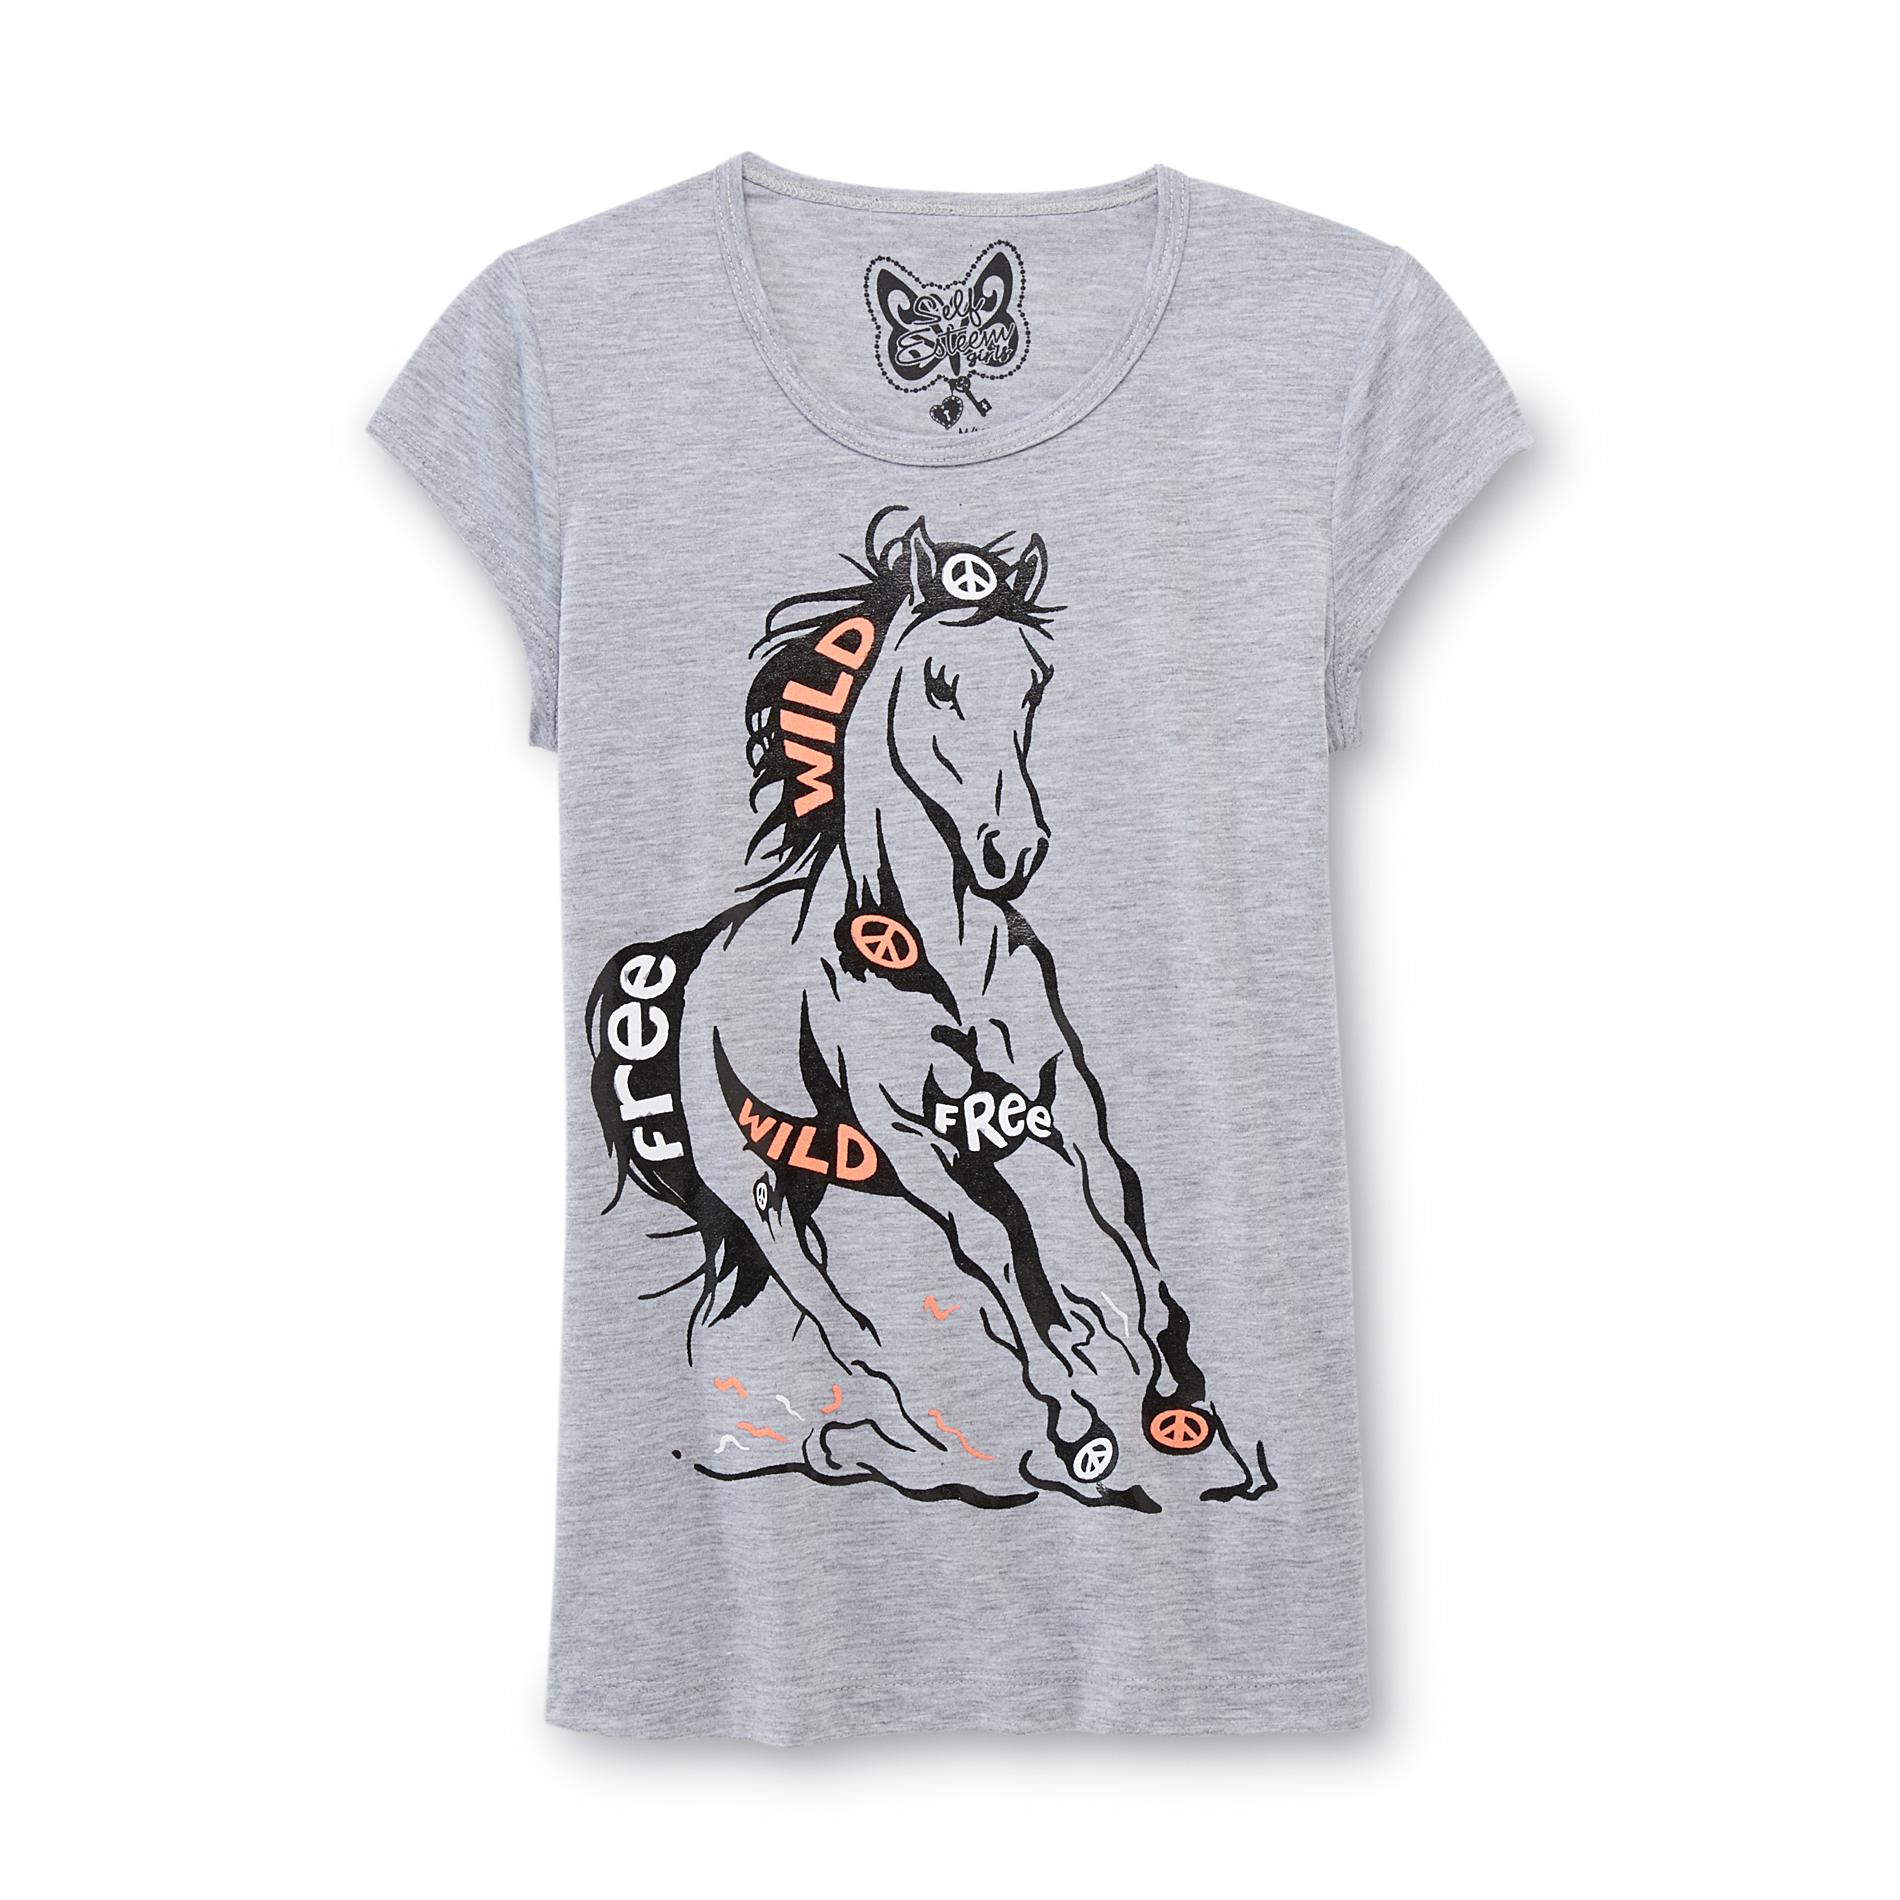 Self Esteem Girl's Graphic T-Shirt - Wild & Free